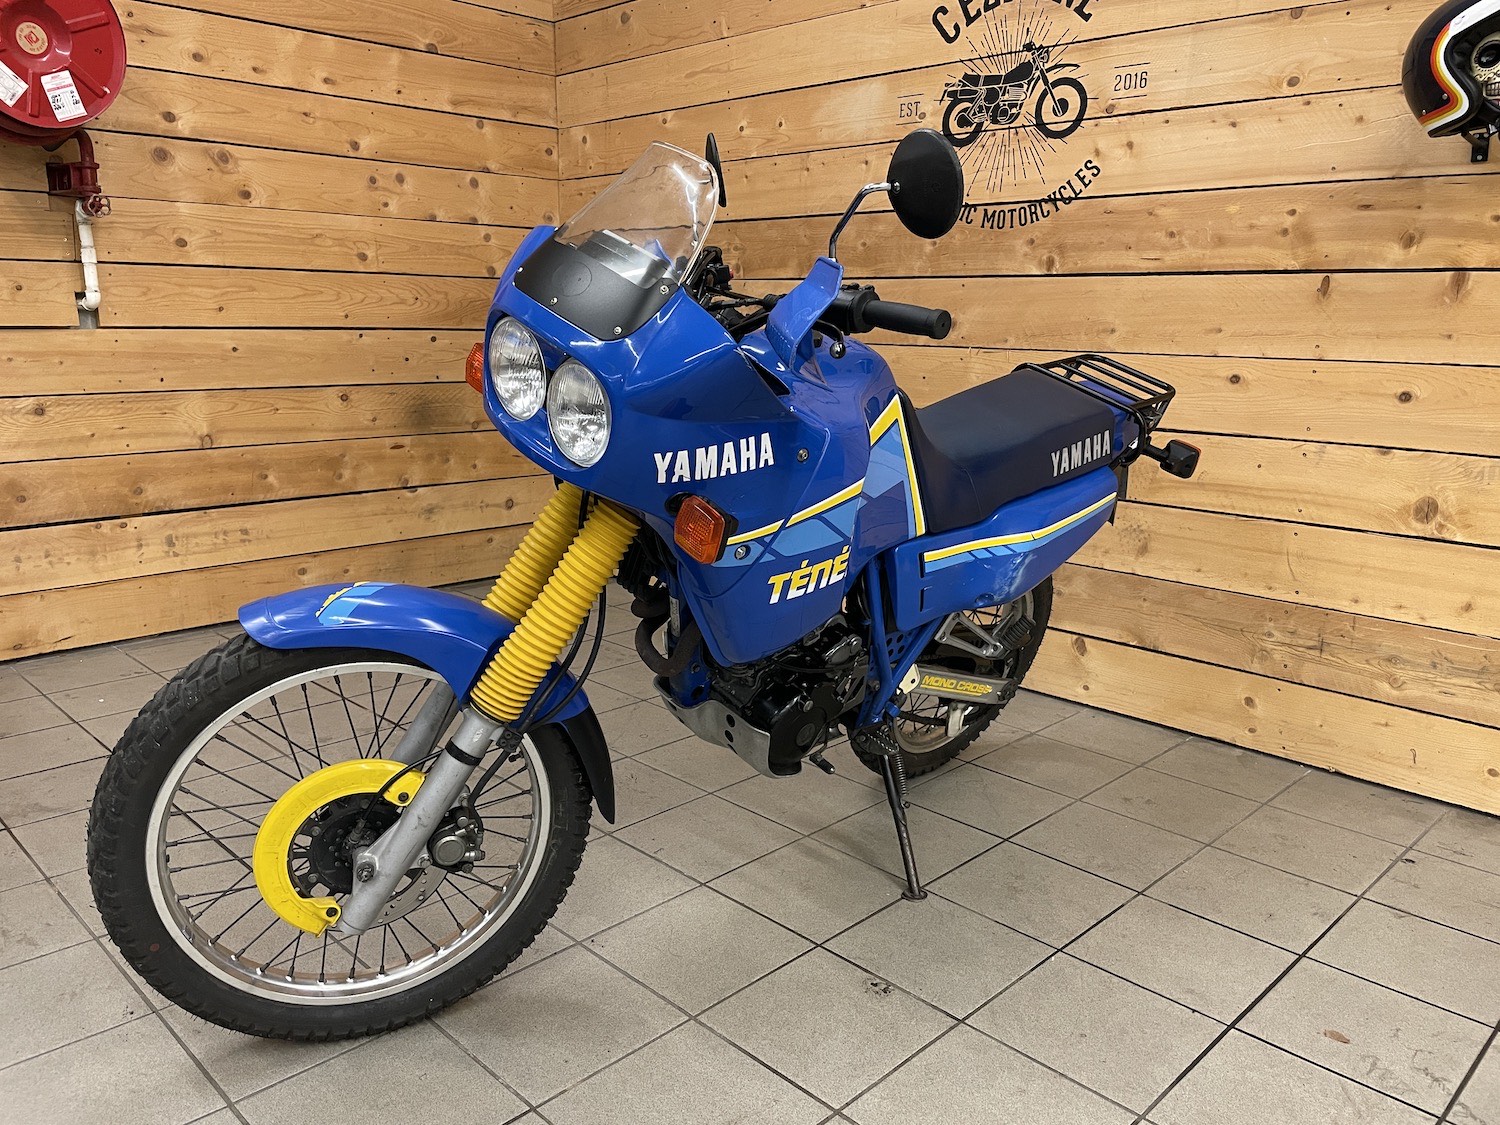 Yamaha_XT600Z_Tenere_cezanne_classic_motorcycle_5-114.jpg